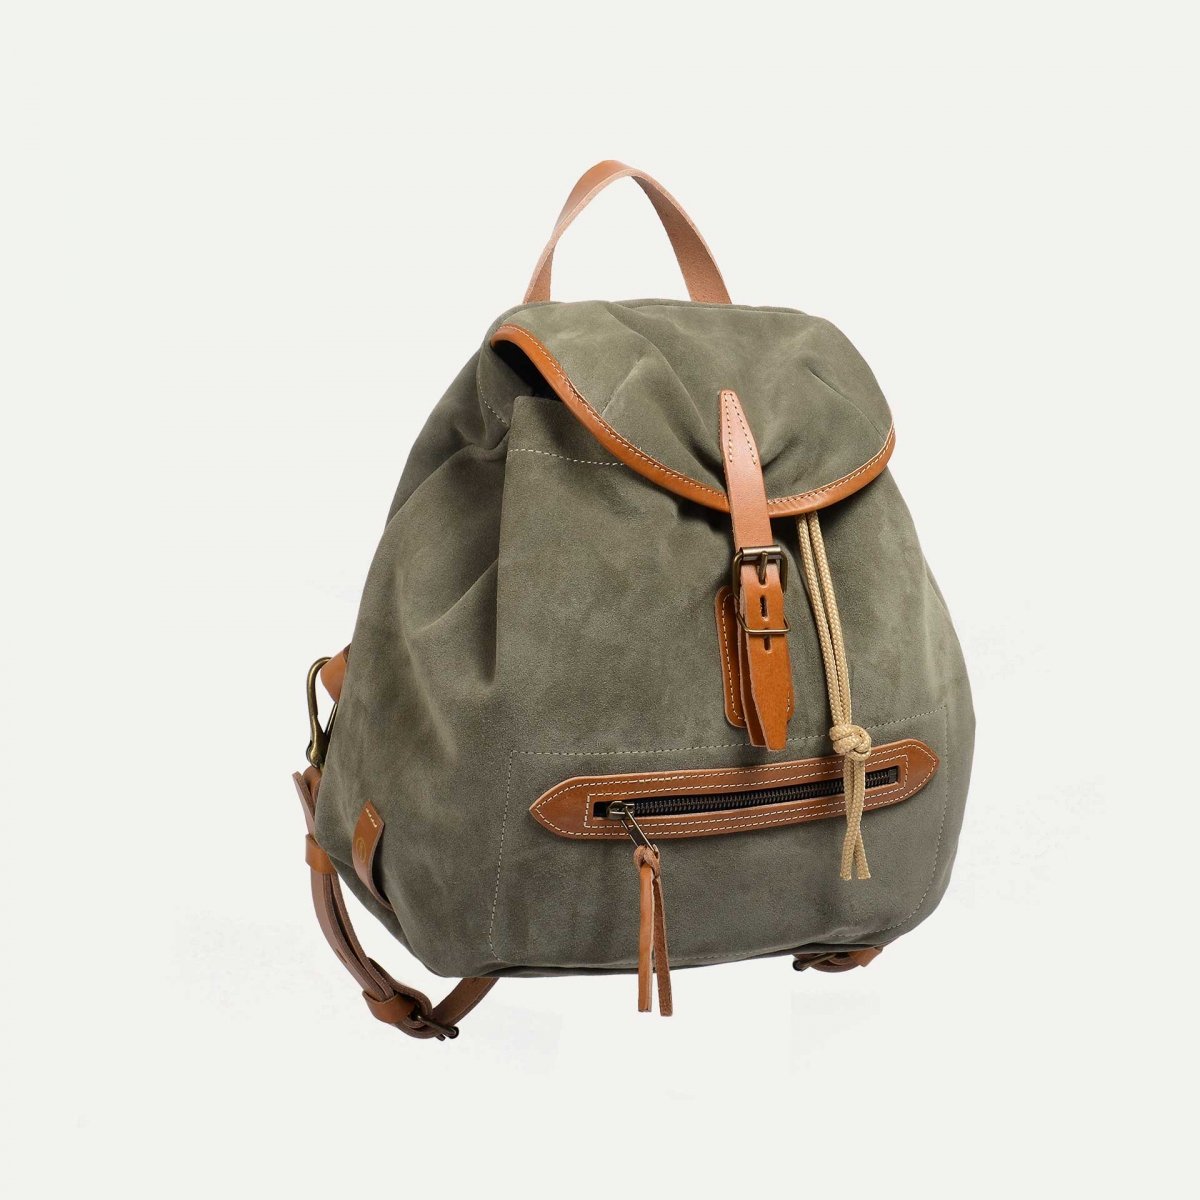 Camp S backpack / Suede - Sage green (image n°1)